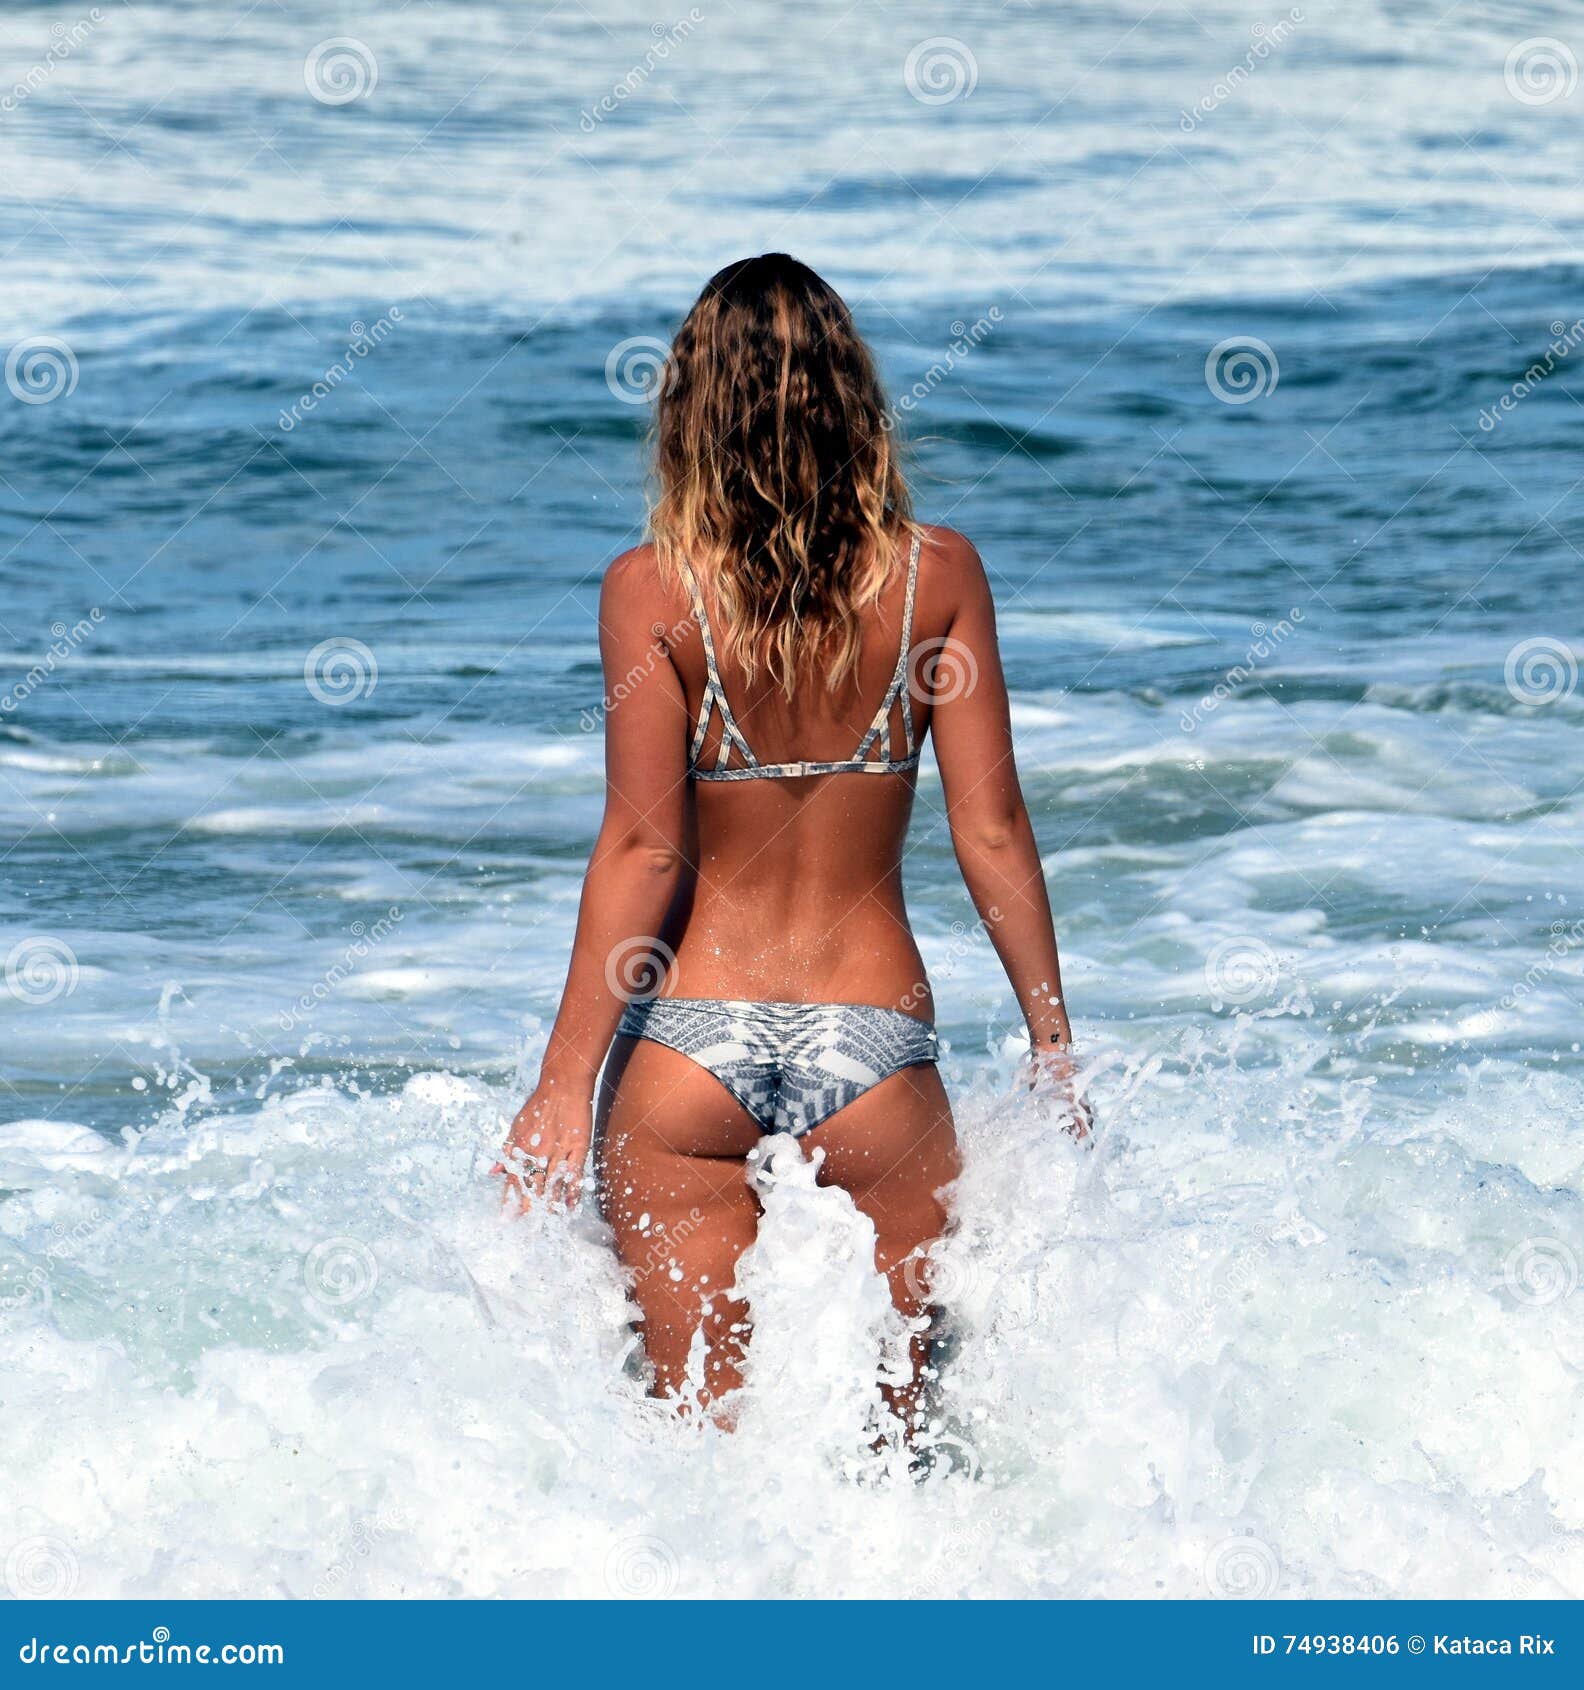 amateur beach nude photo woman